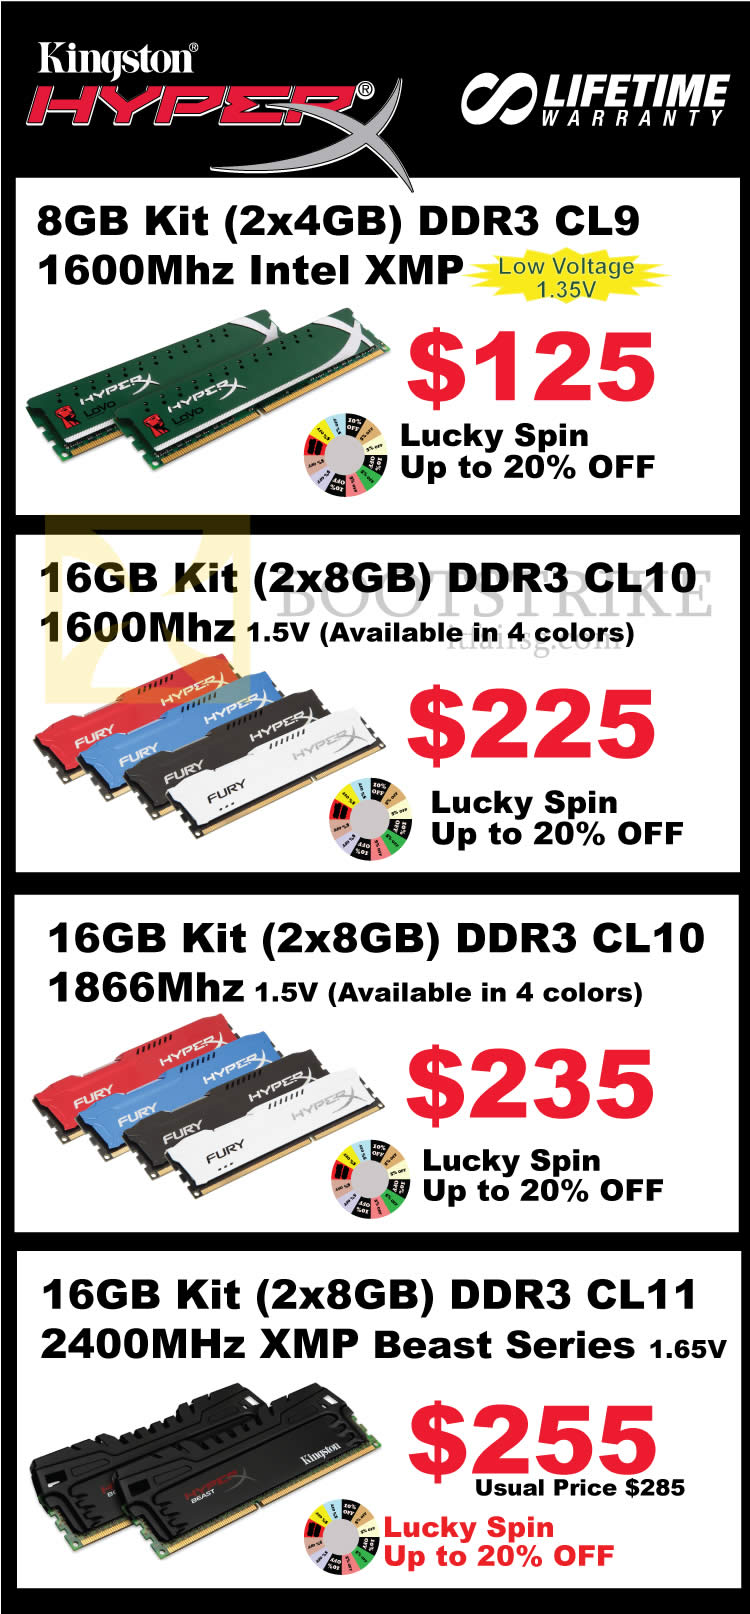 COMEX 2014 price list image brochure of Convergent Kingston HyperX RAM Memory DDR3 CL9, CL10, CL11, Intel XMP, XMP Beast Series